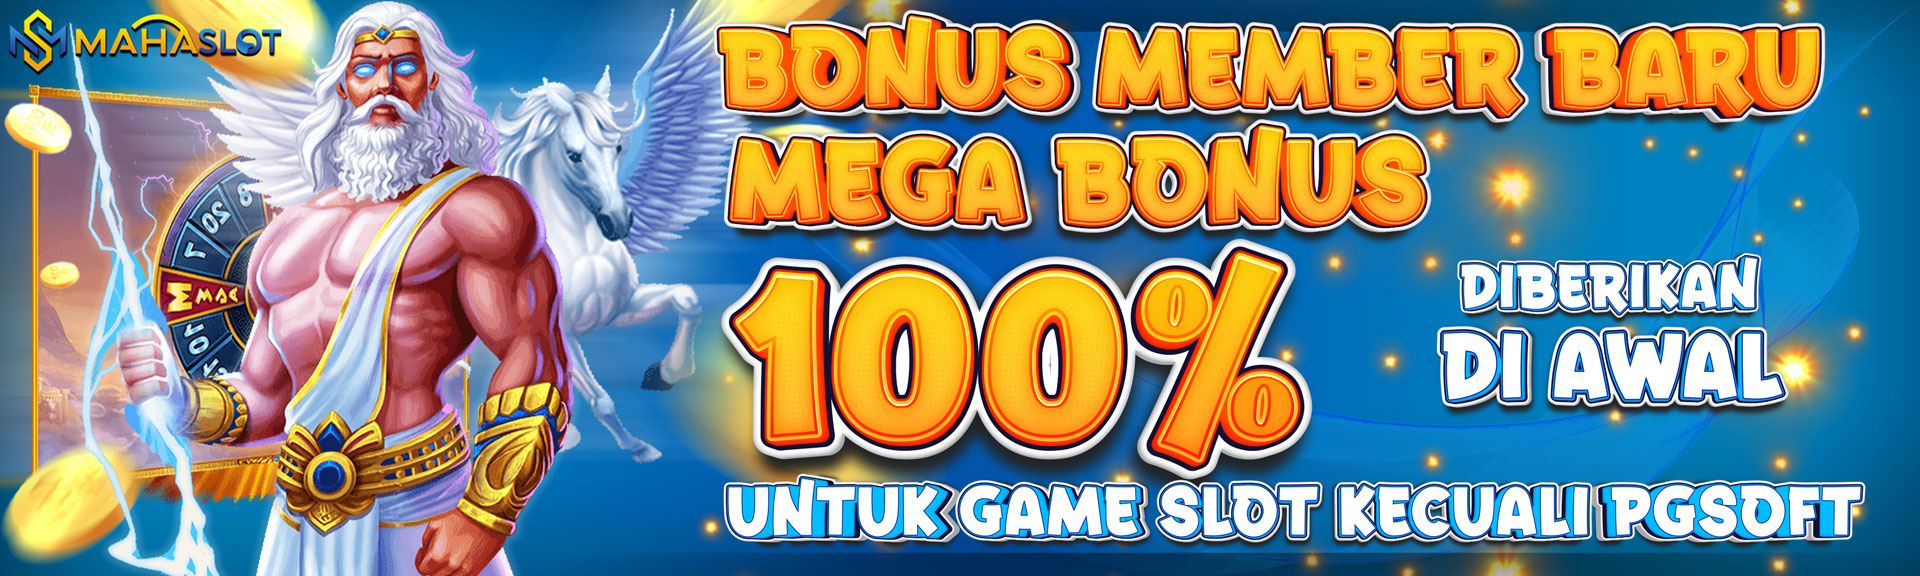 Mega Bonus Slot 100%